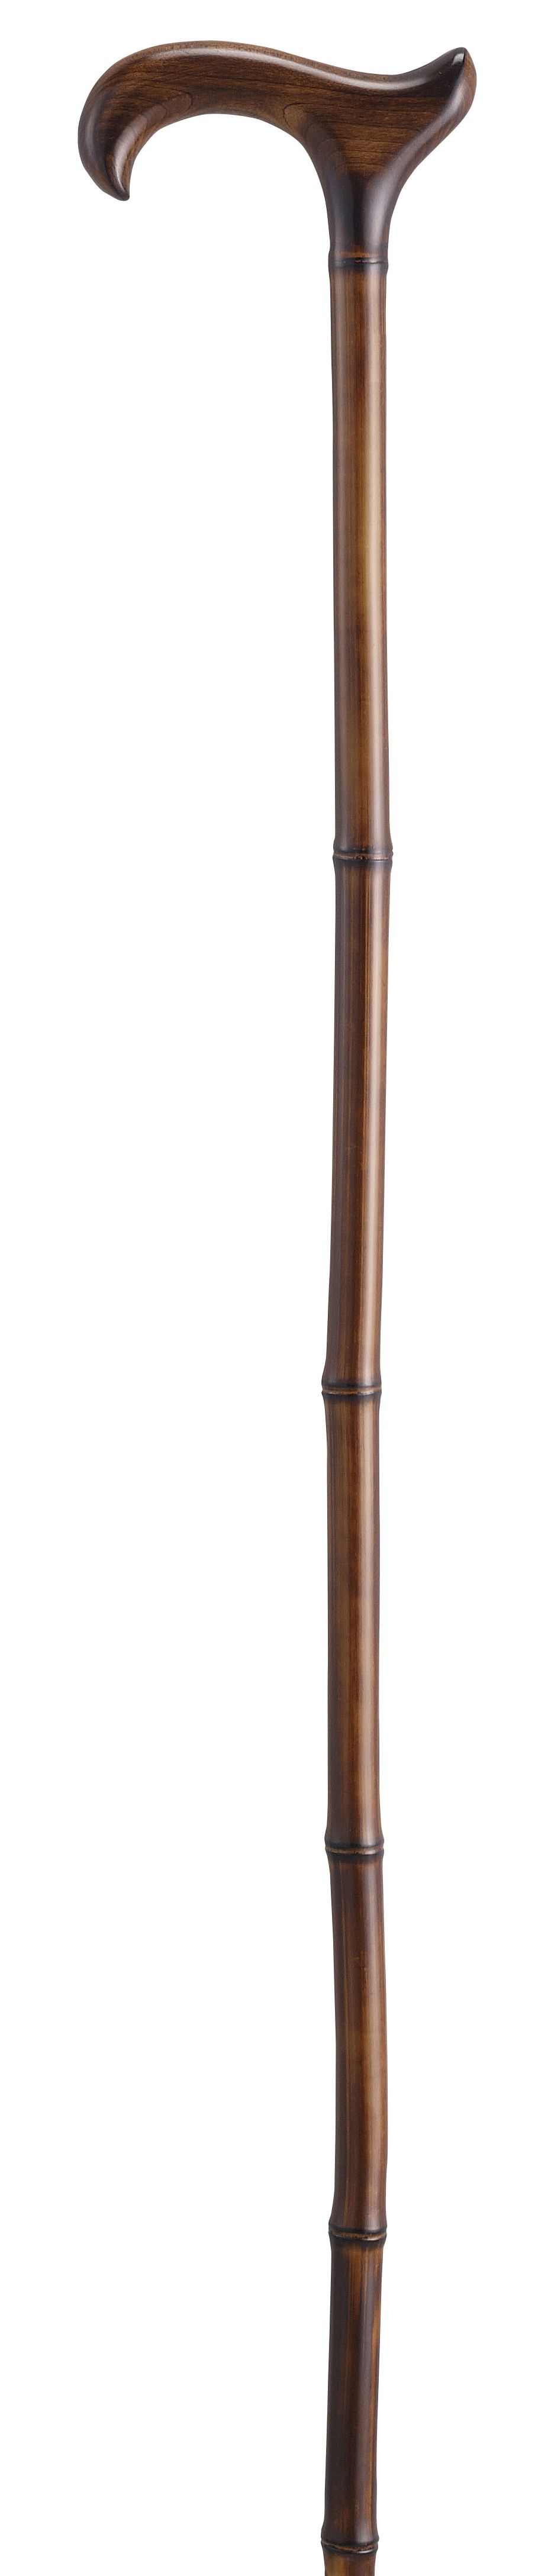 STANDARD ドイツ製ブナと竹のアンチークステッキ 杖